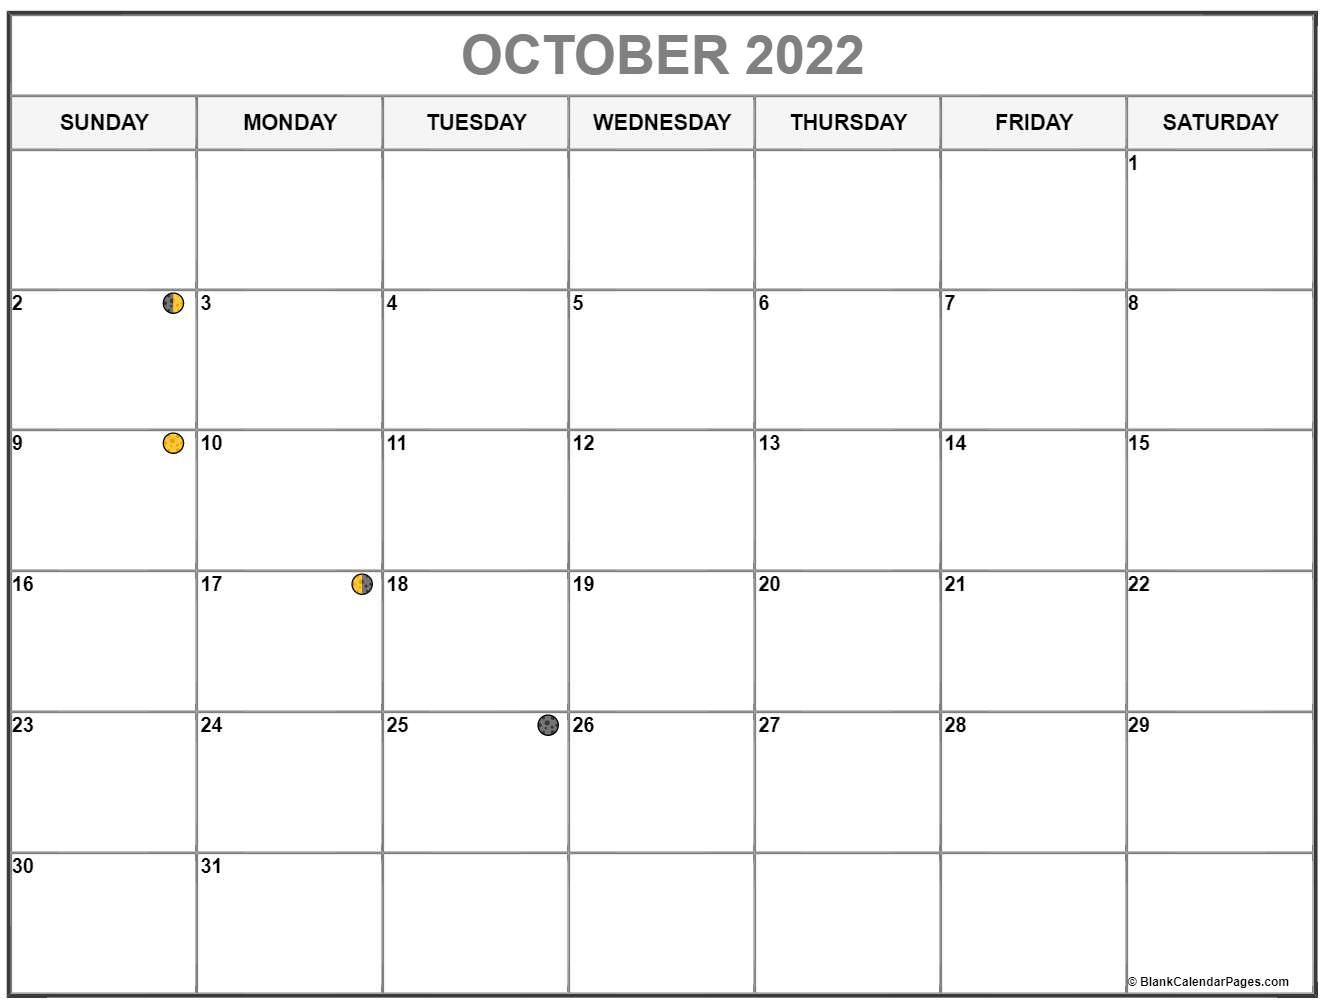 October 2022 Lunar Calendar | Moon Phase Calendar